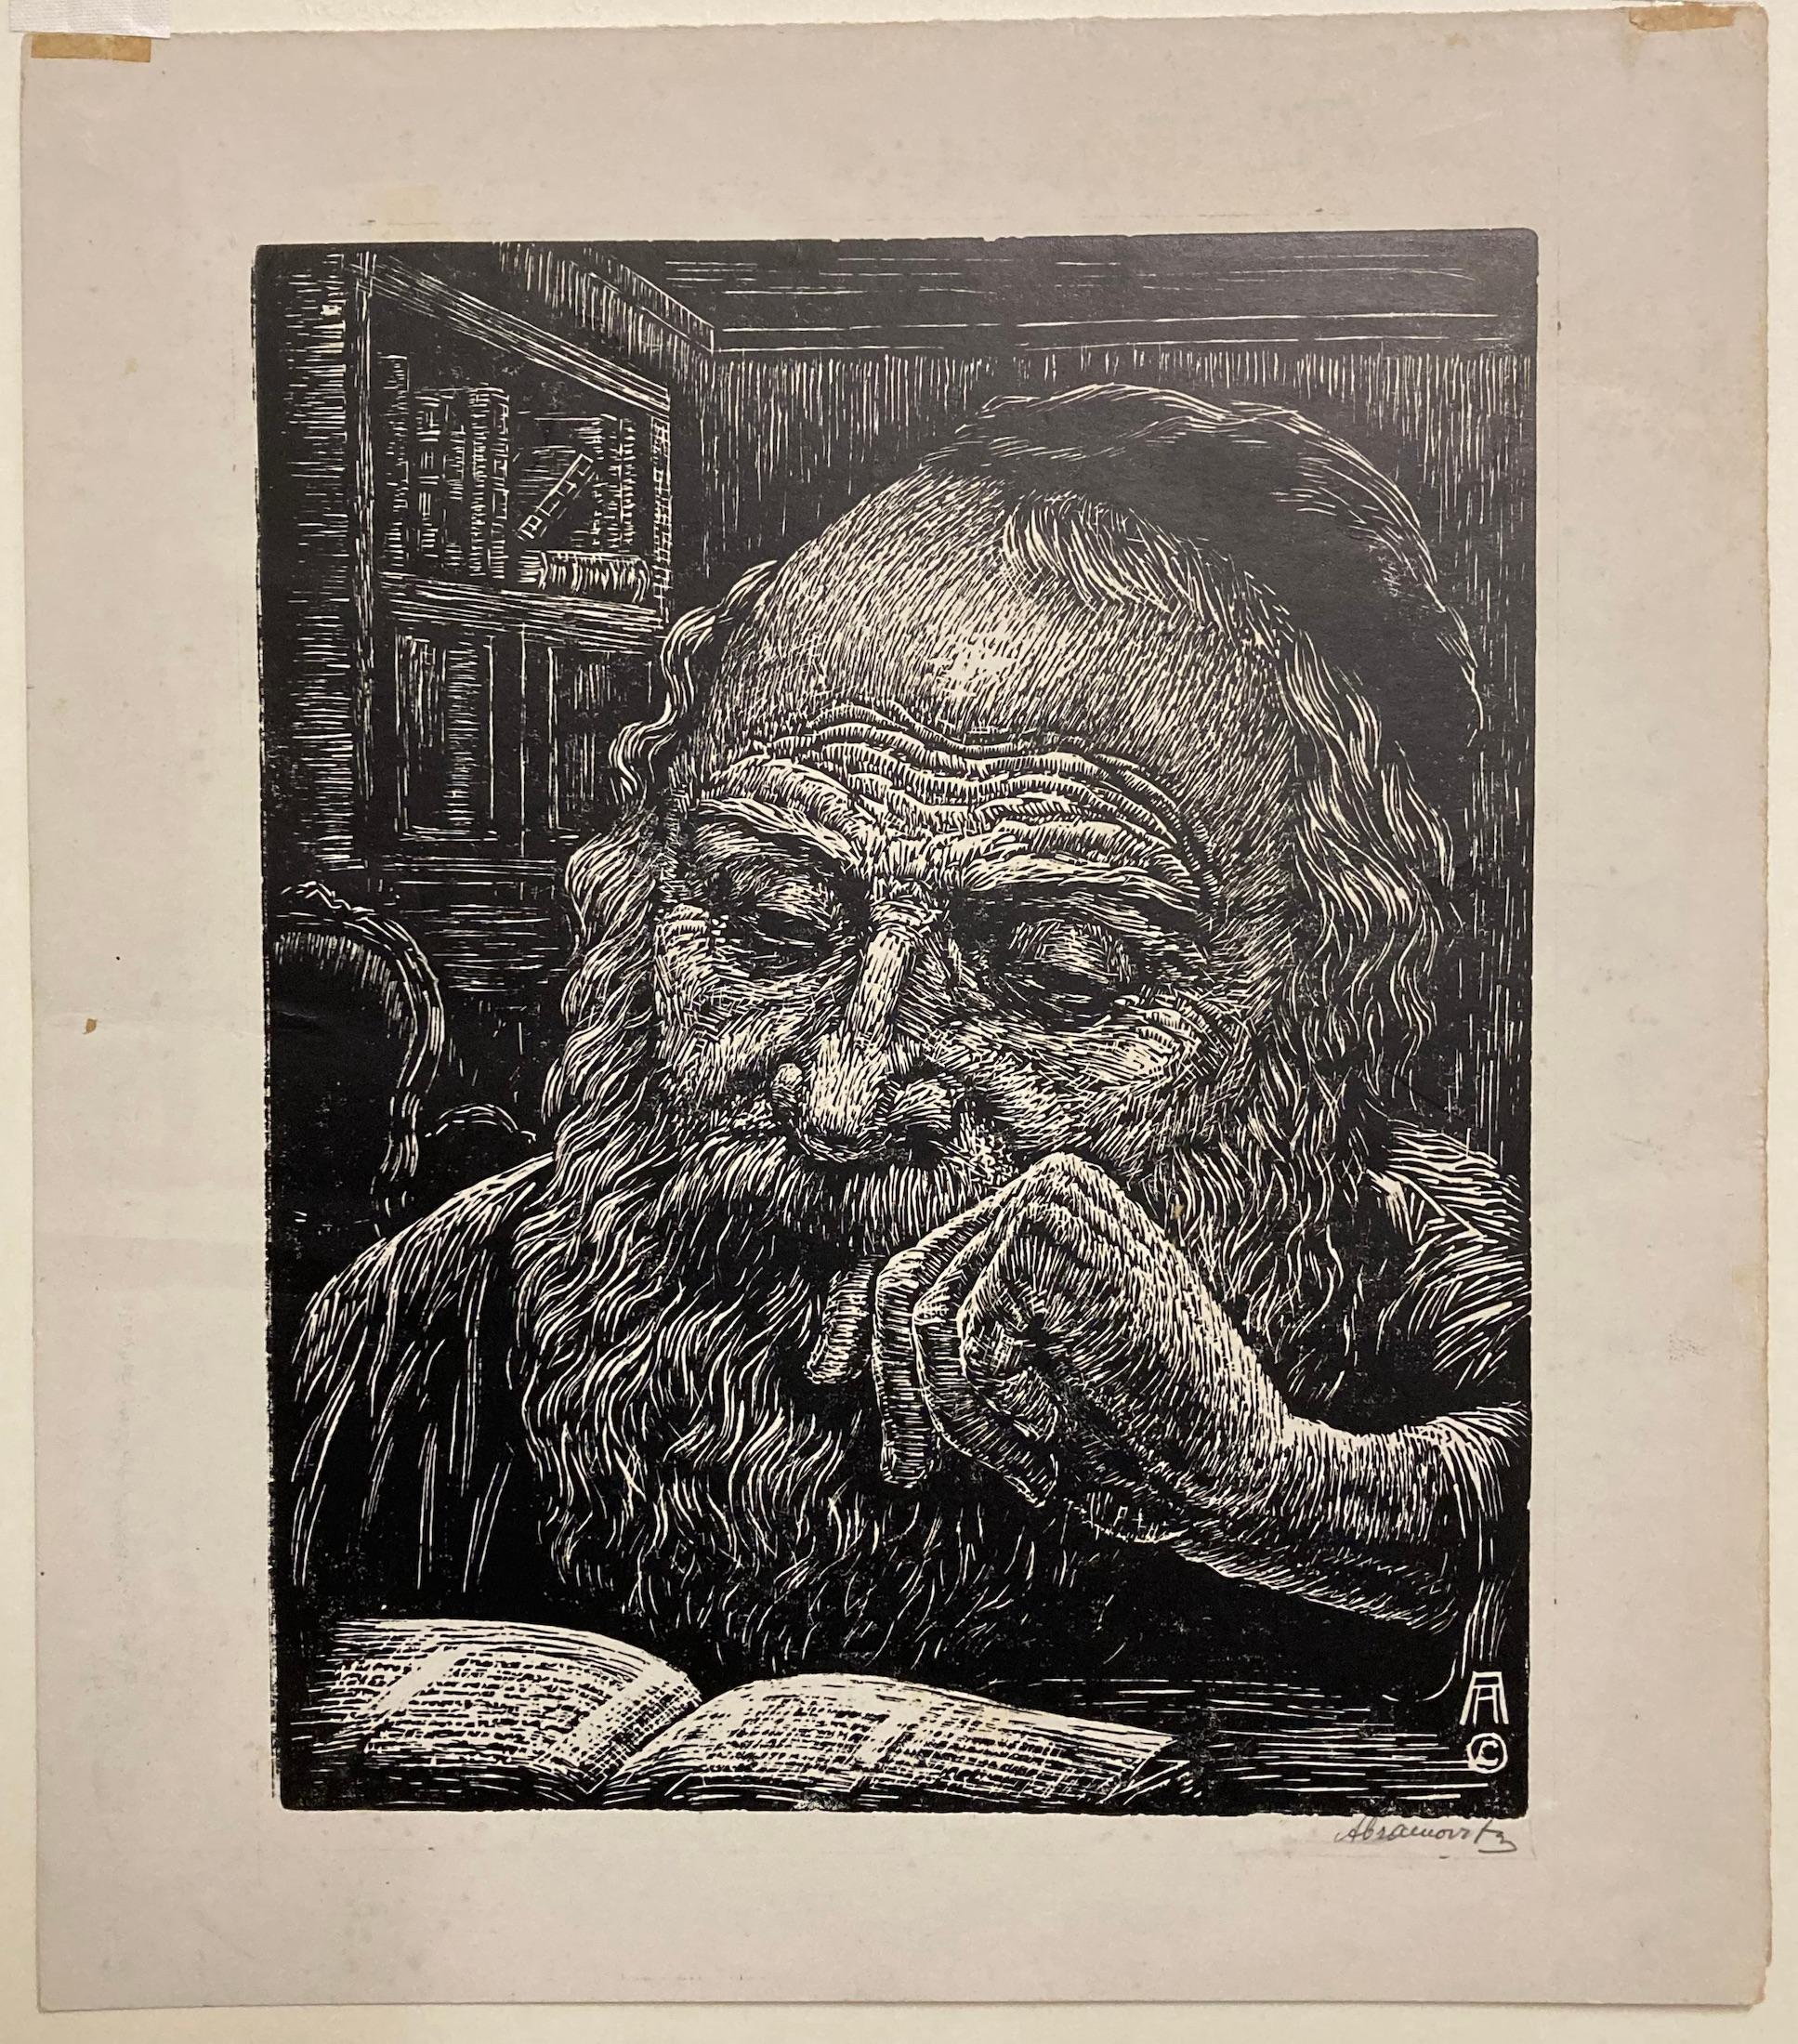 (The Scholar) - Print by Albert Abramovitz